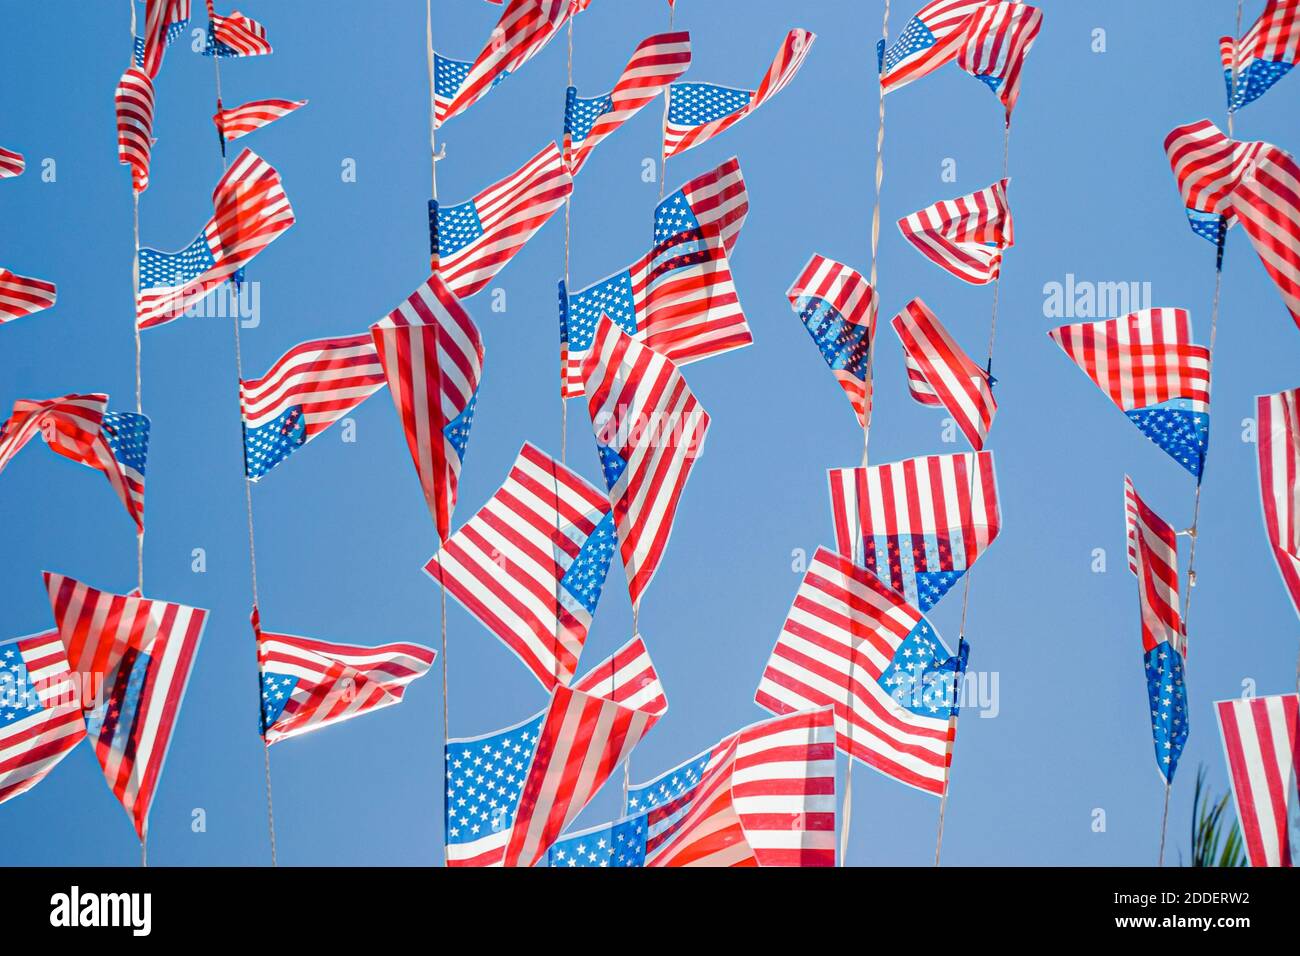 Florida Ft. Fort Lauderdale Las Olas Riverfront,flags banners against blue sky, Stock Photo